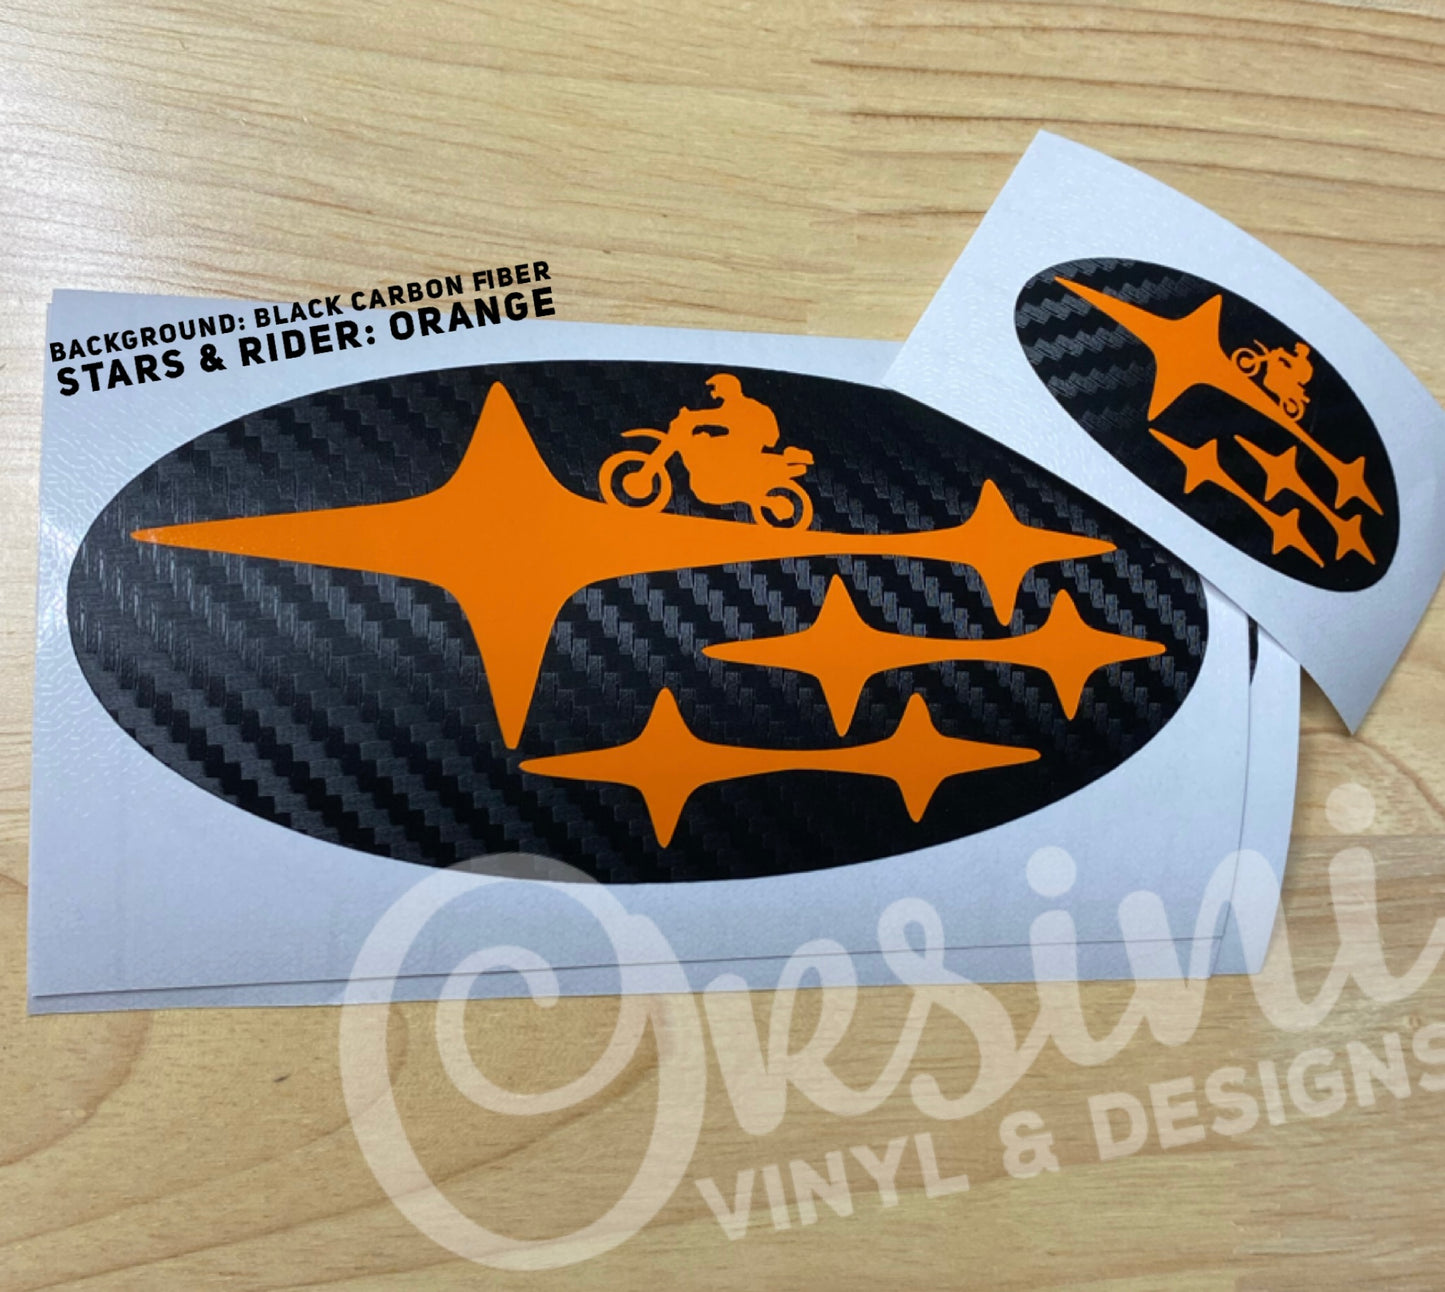 Motorcycle Rider (Dual-Sport/Adventure) On Subaru Stars Emblem Overlay Decal Set